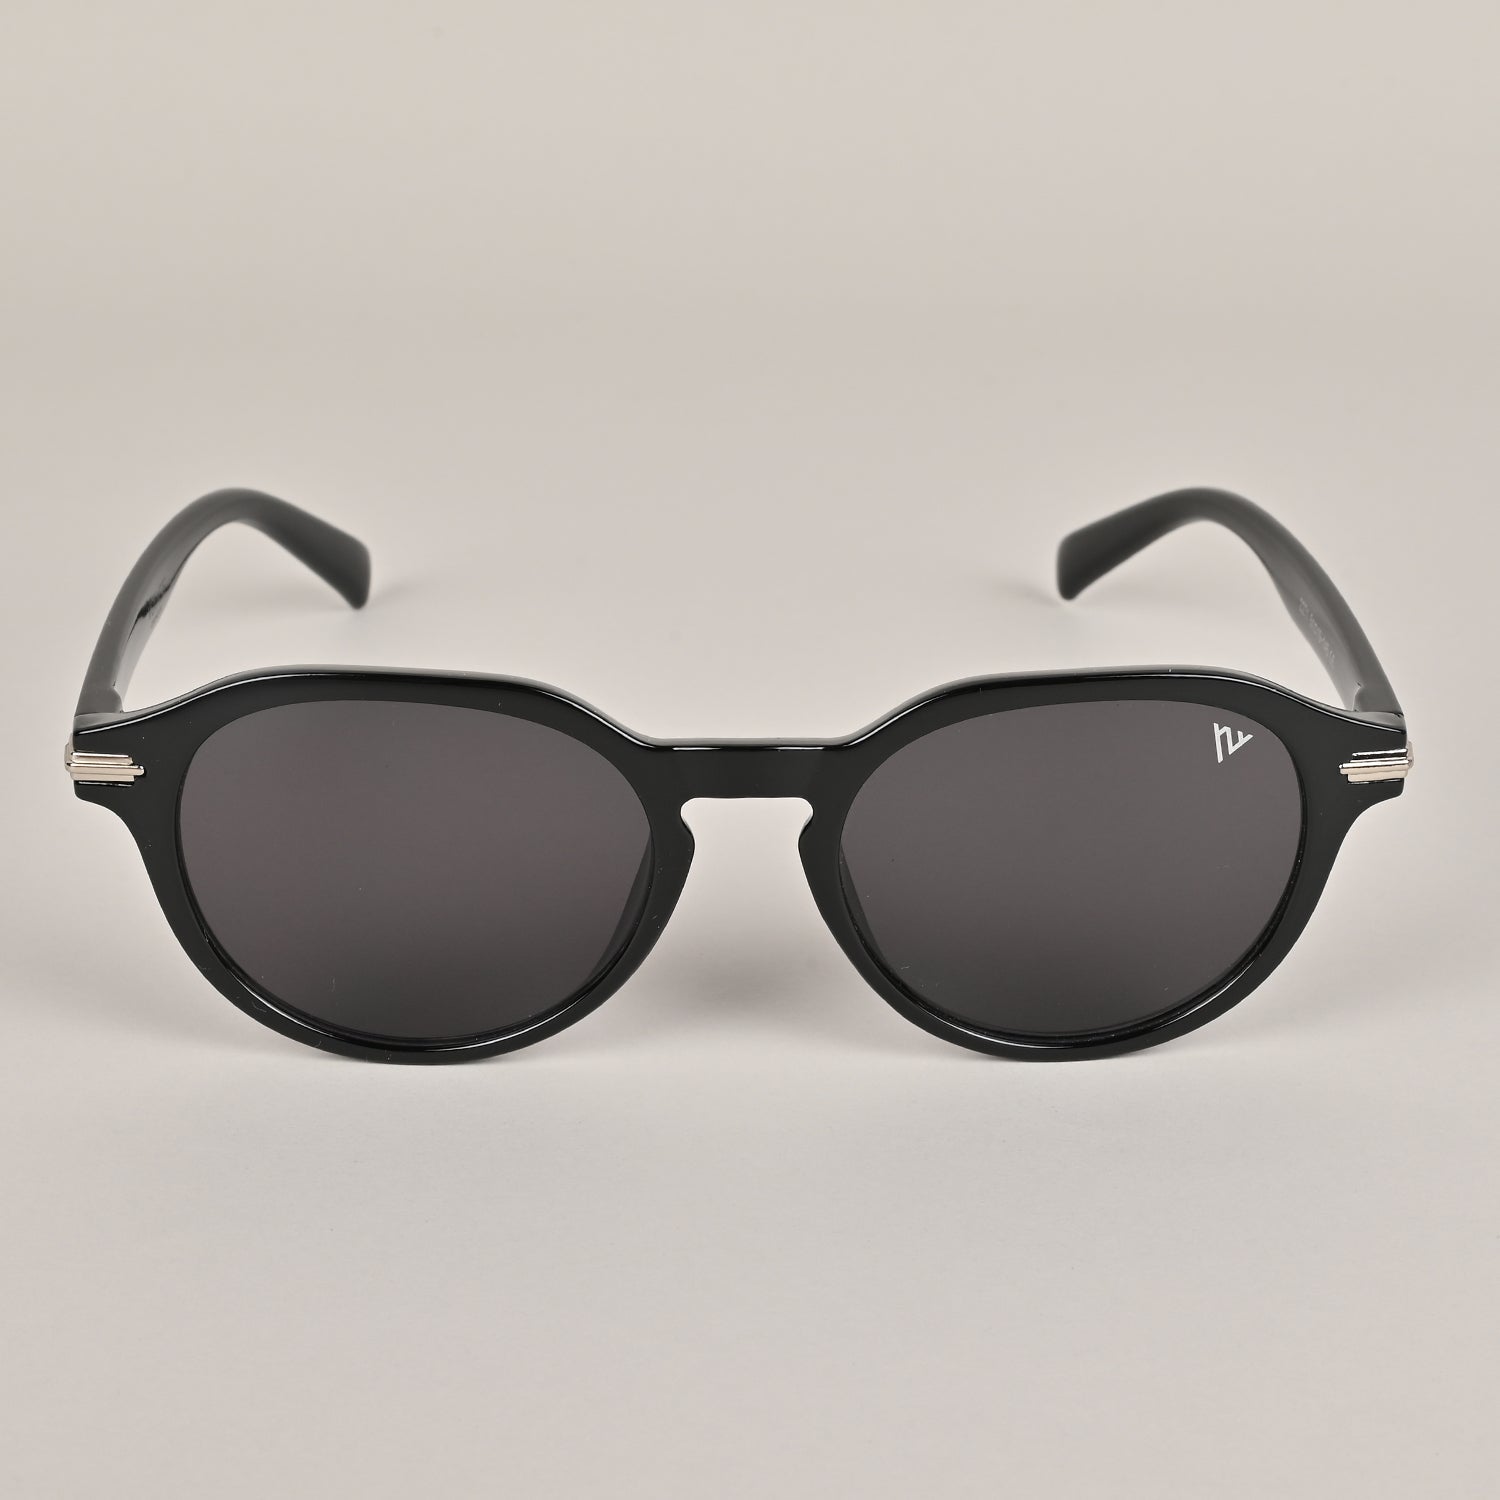 Voyage Black Round Sunglasses MG3753